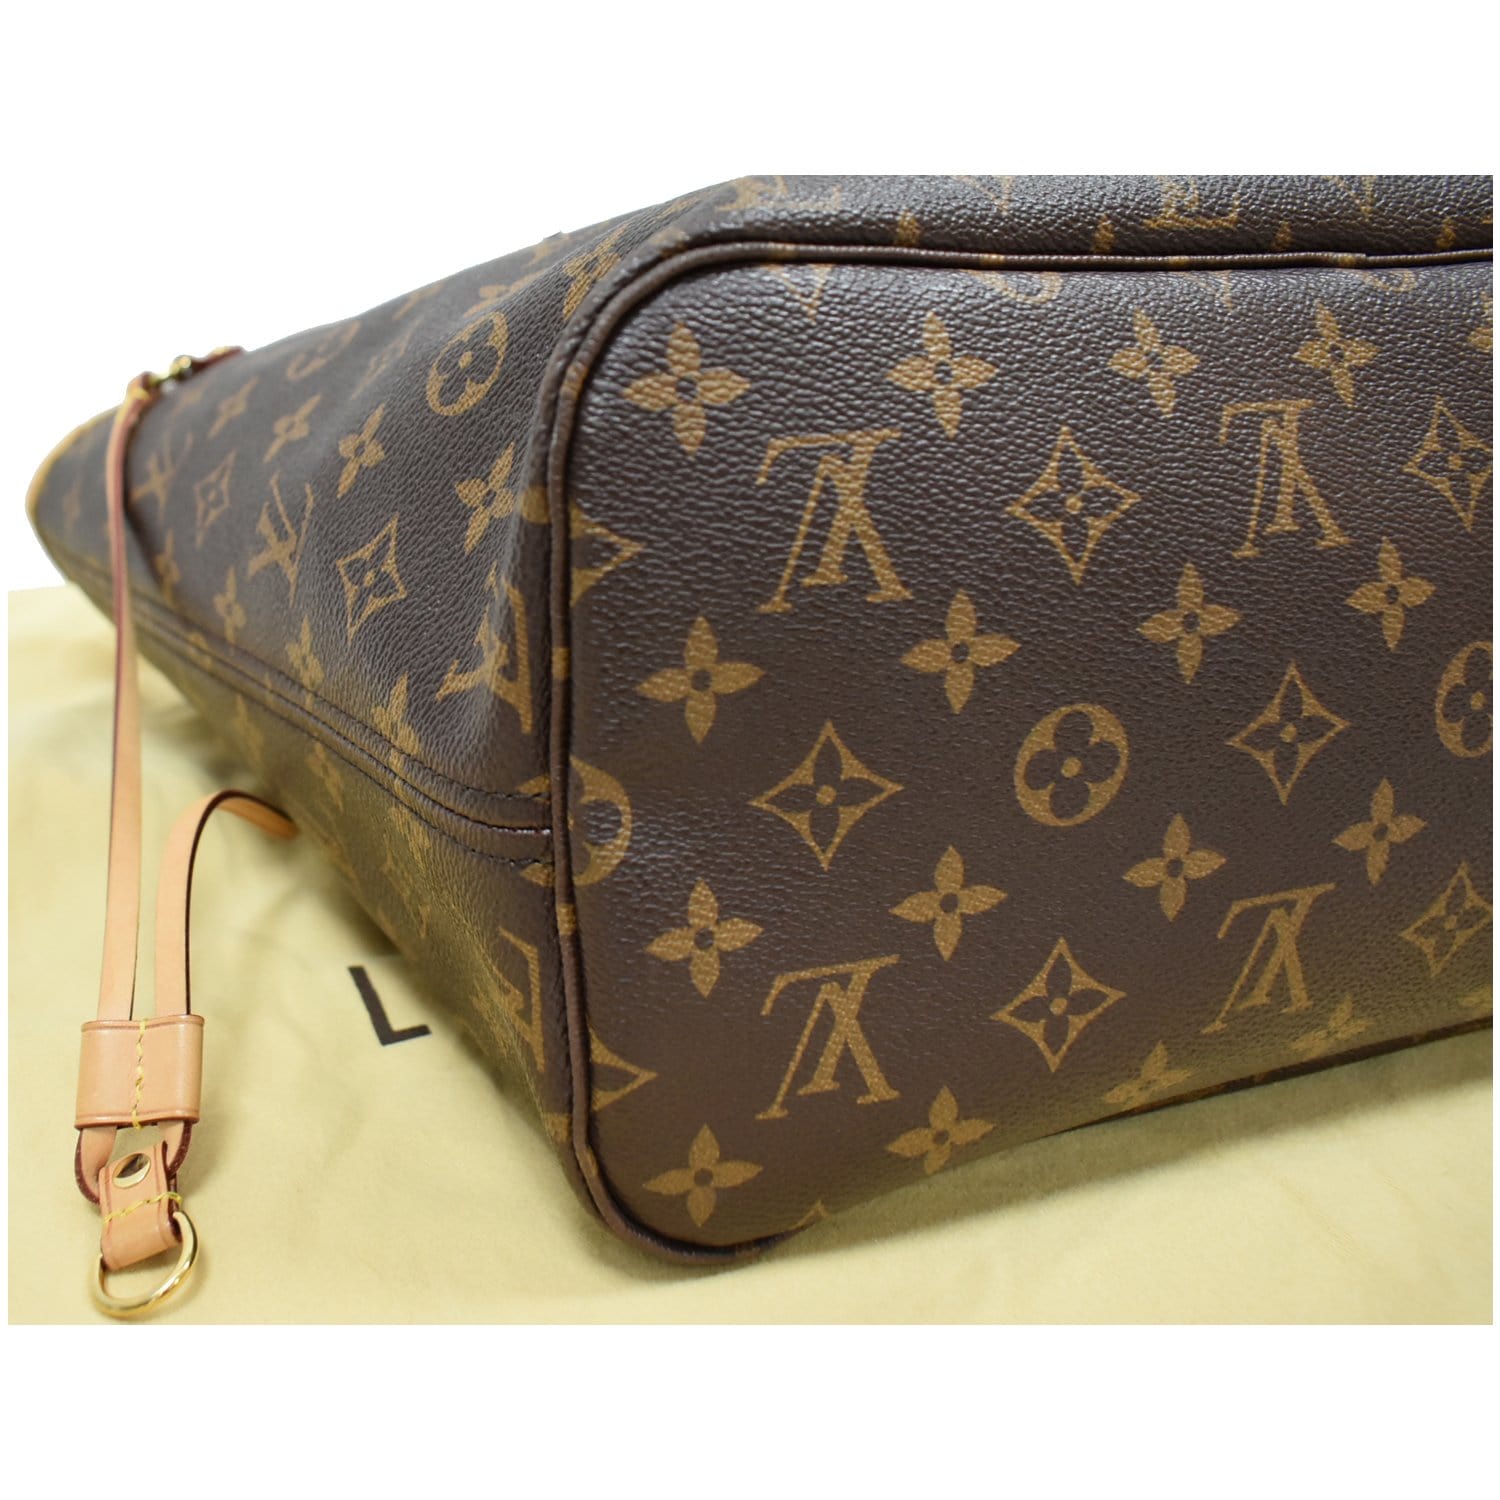 True-to-ORIGINAL] Louis Vuitton Neverfull MM Tote Bag Monogram